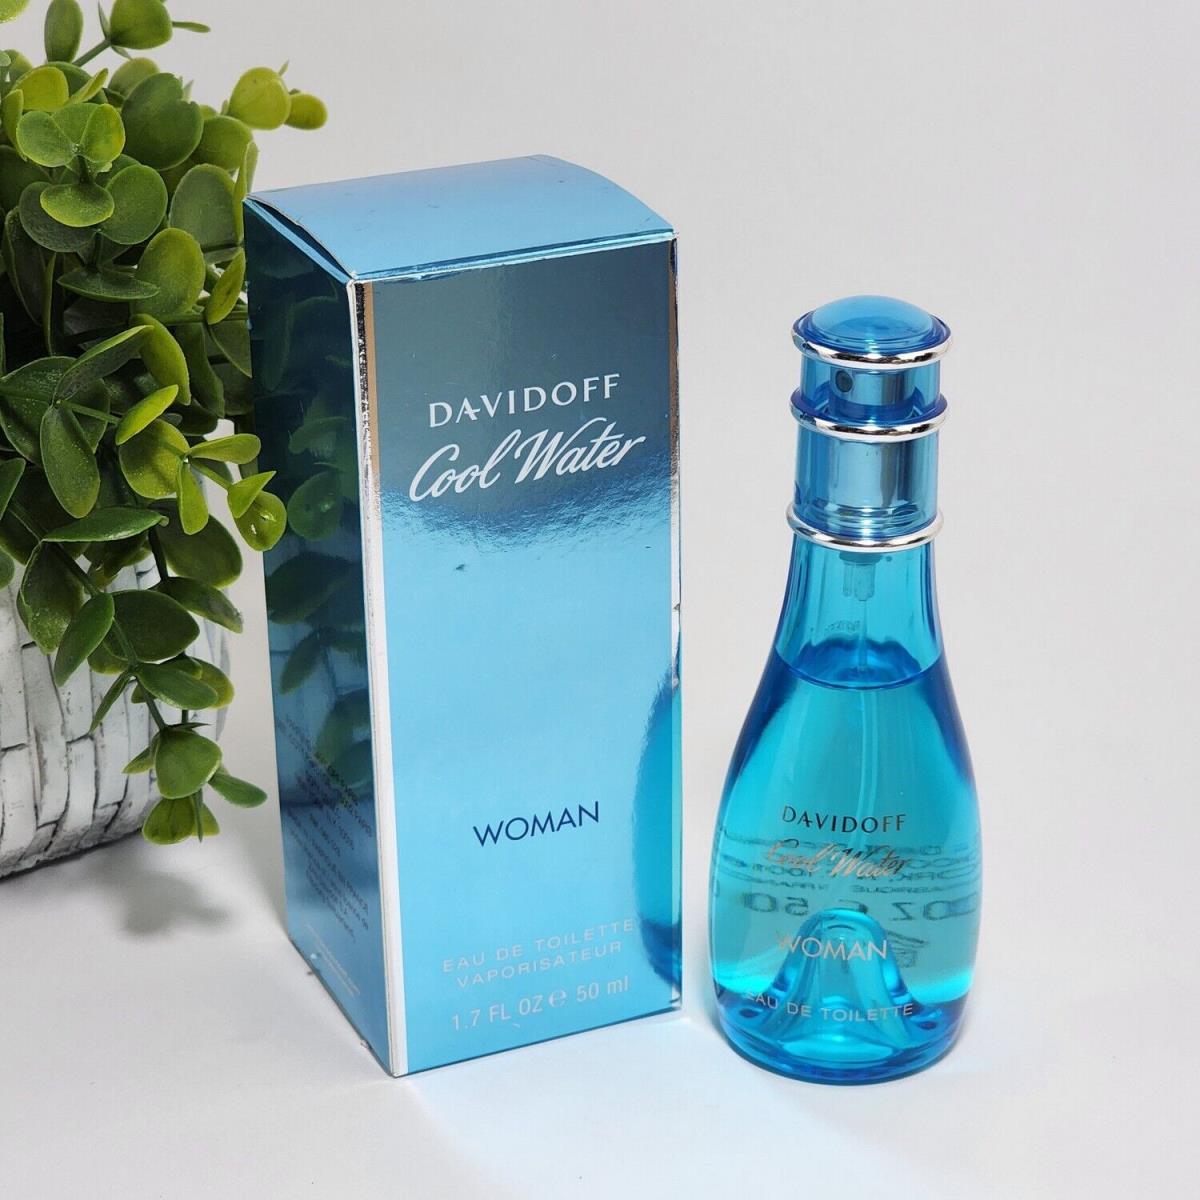 Cool Water Eau de Toilette Spray Perfume For Women by Davidoff 1.7 fl oz / 50 mL